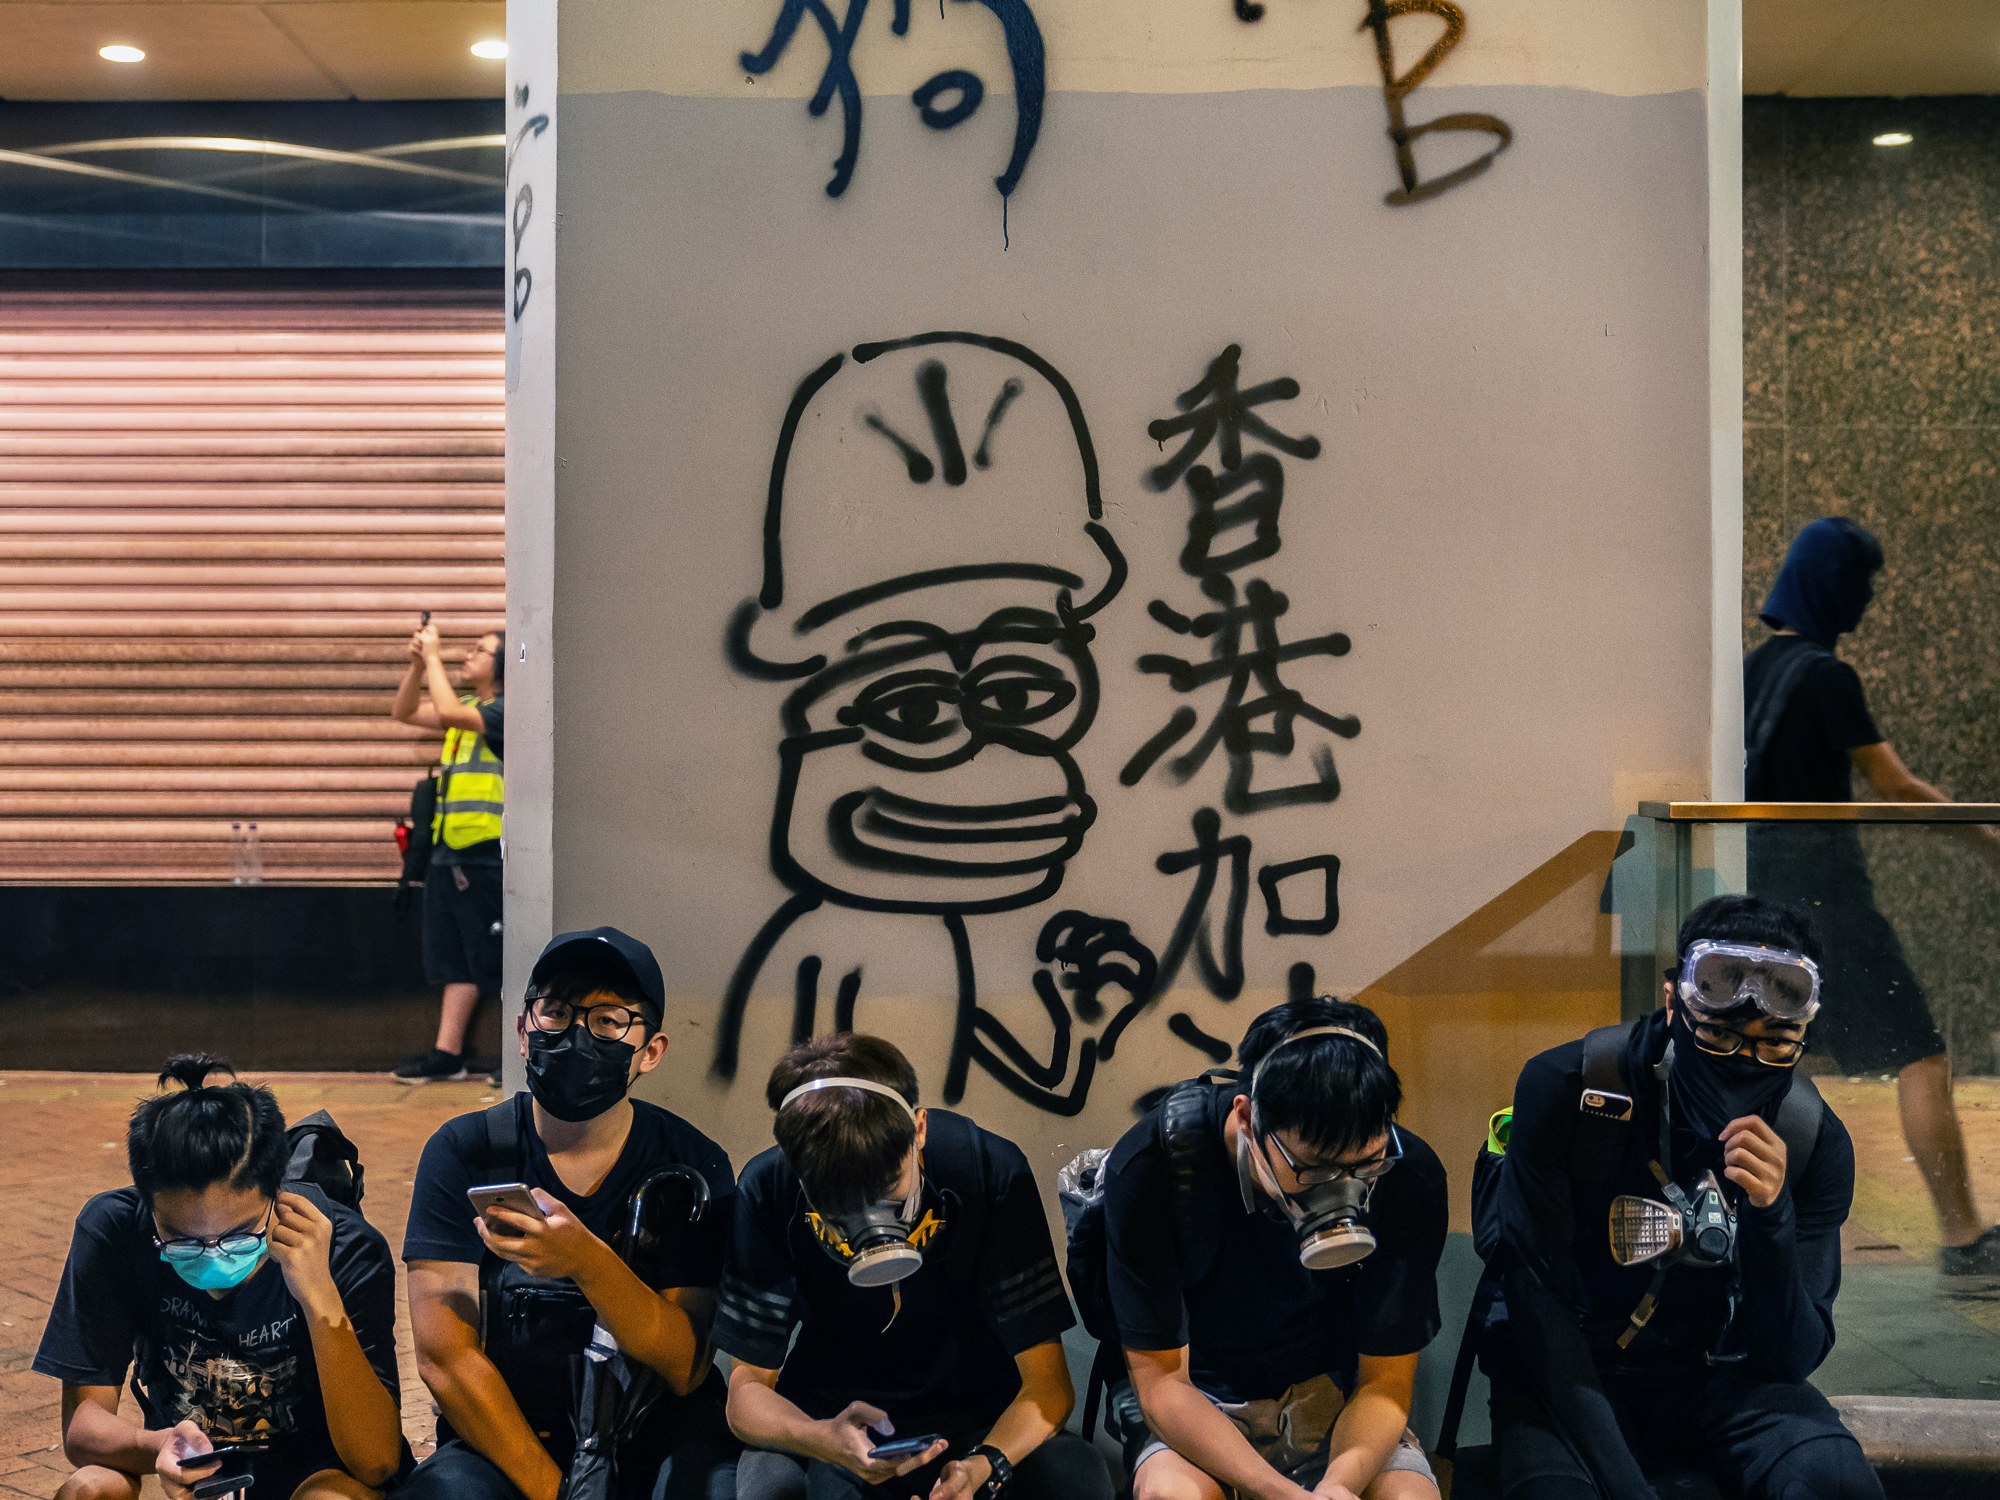 Pepe the Frog in Hong Kong